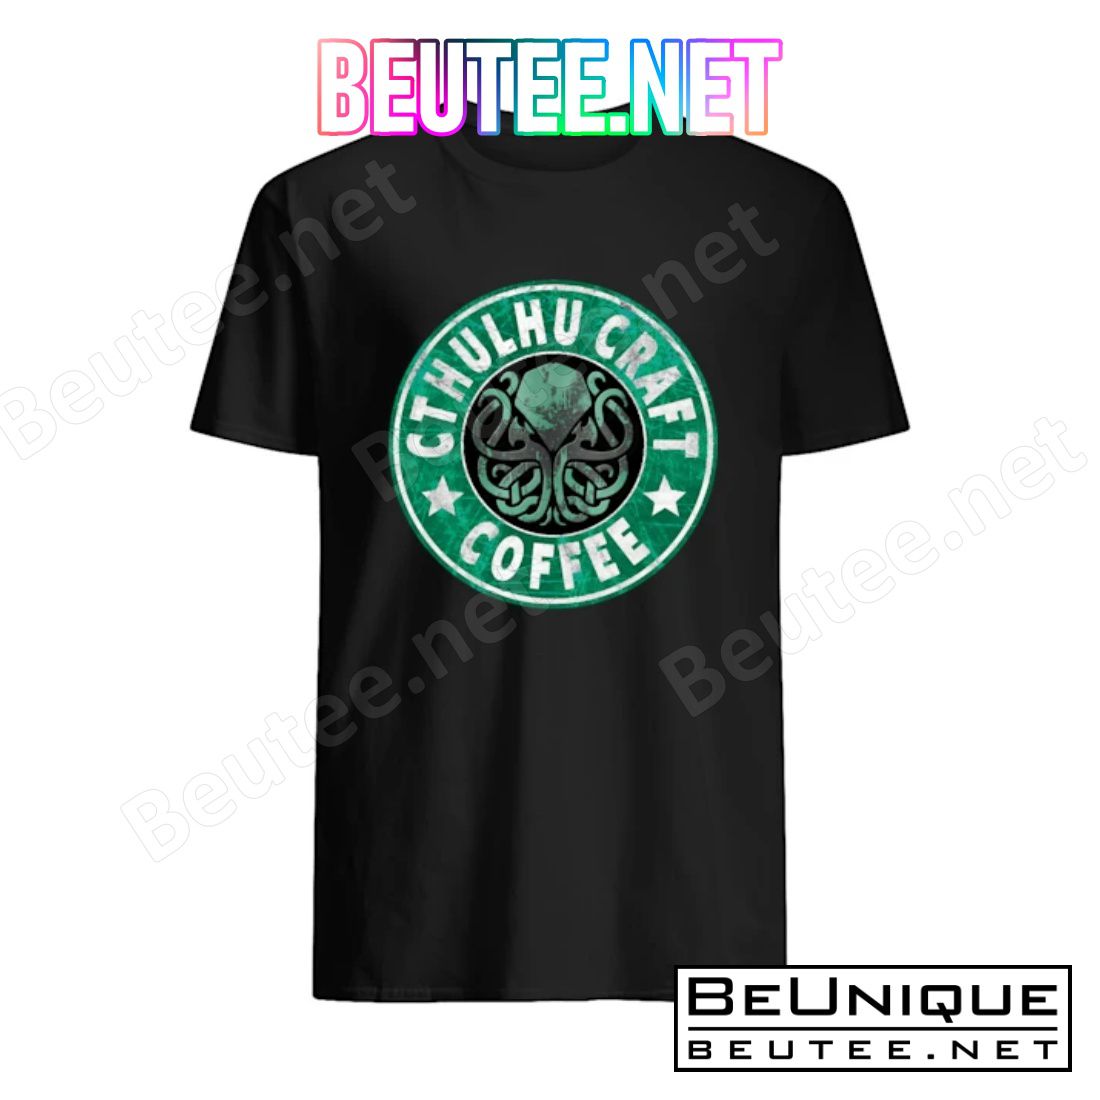 Cthulhu Craft Coffee Shirt